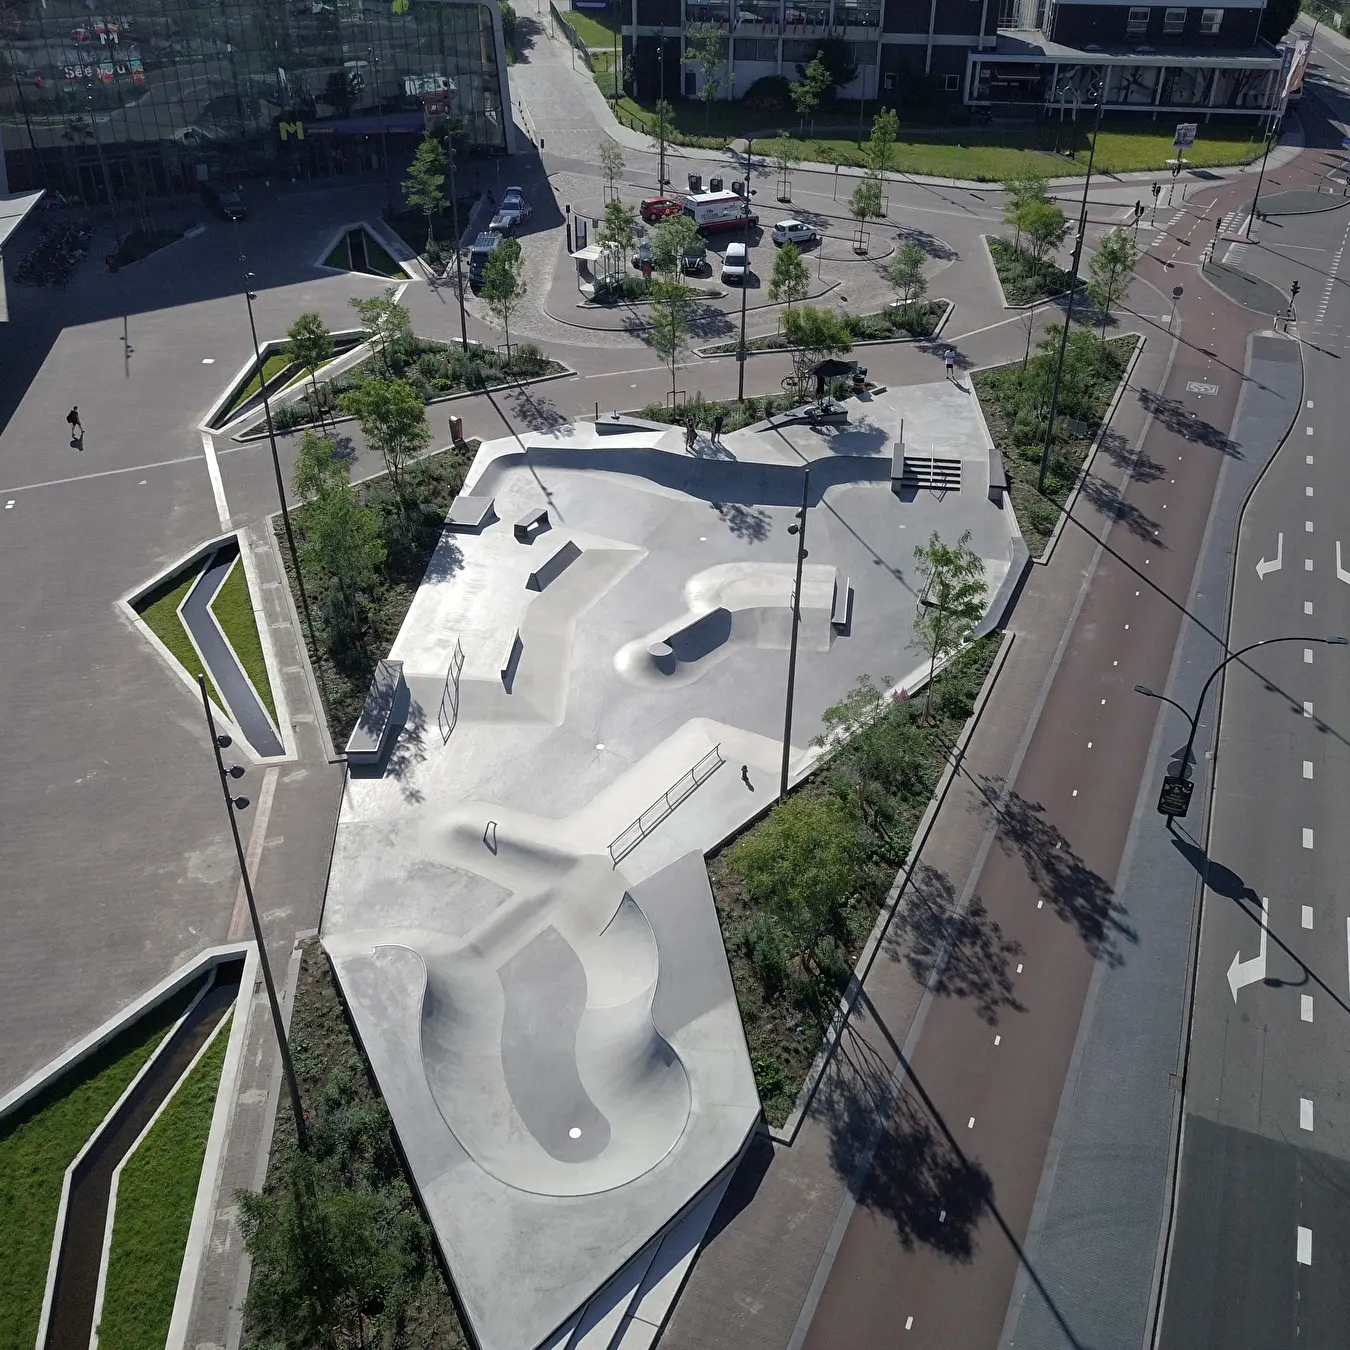 Nine Yards Hengelo skateparks design ontwerpen